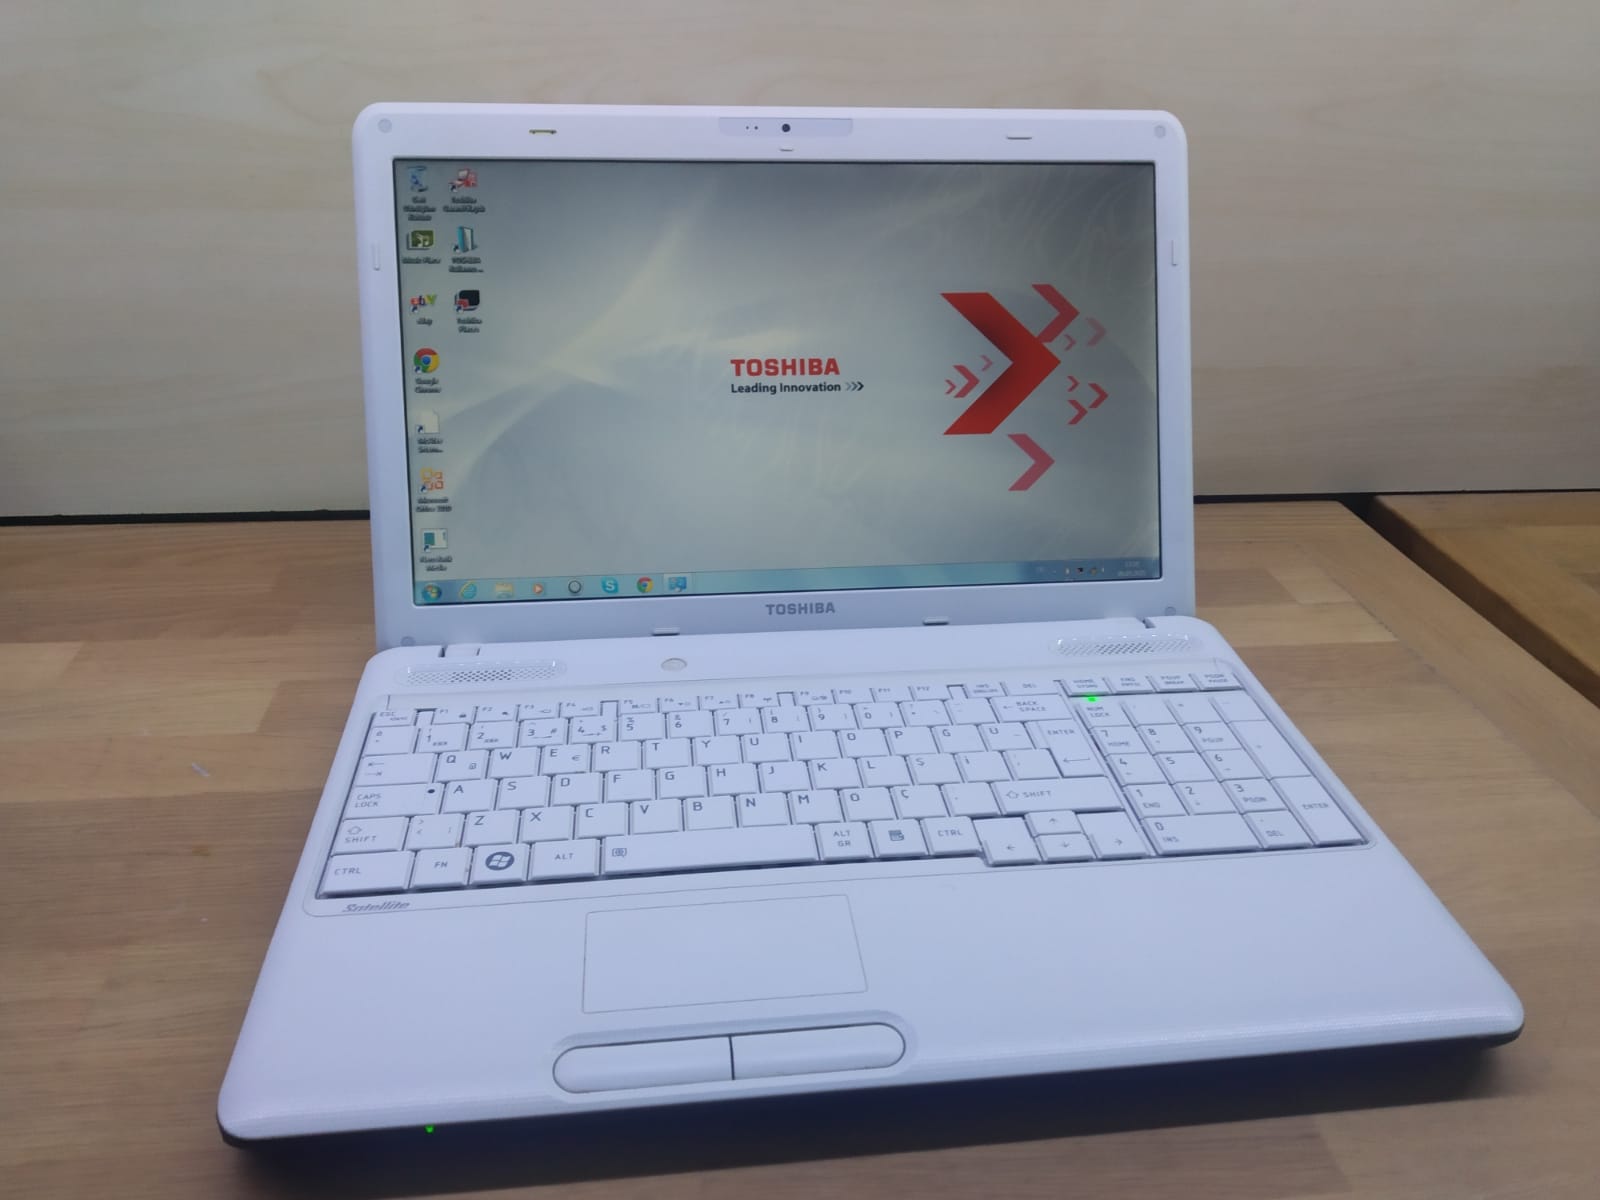 SATILDI] Toshiba Satellite C660D Laptop 1500 TL | DonanımHaber Forum